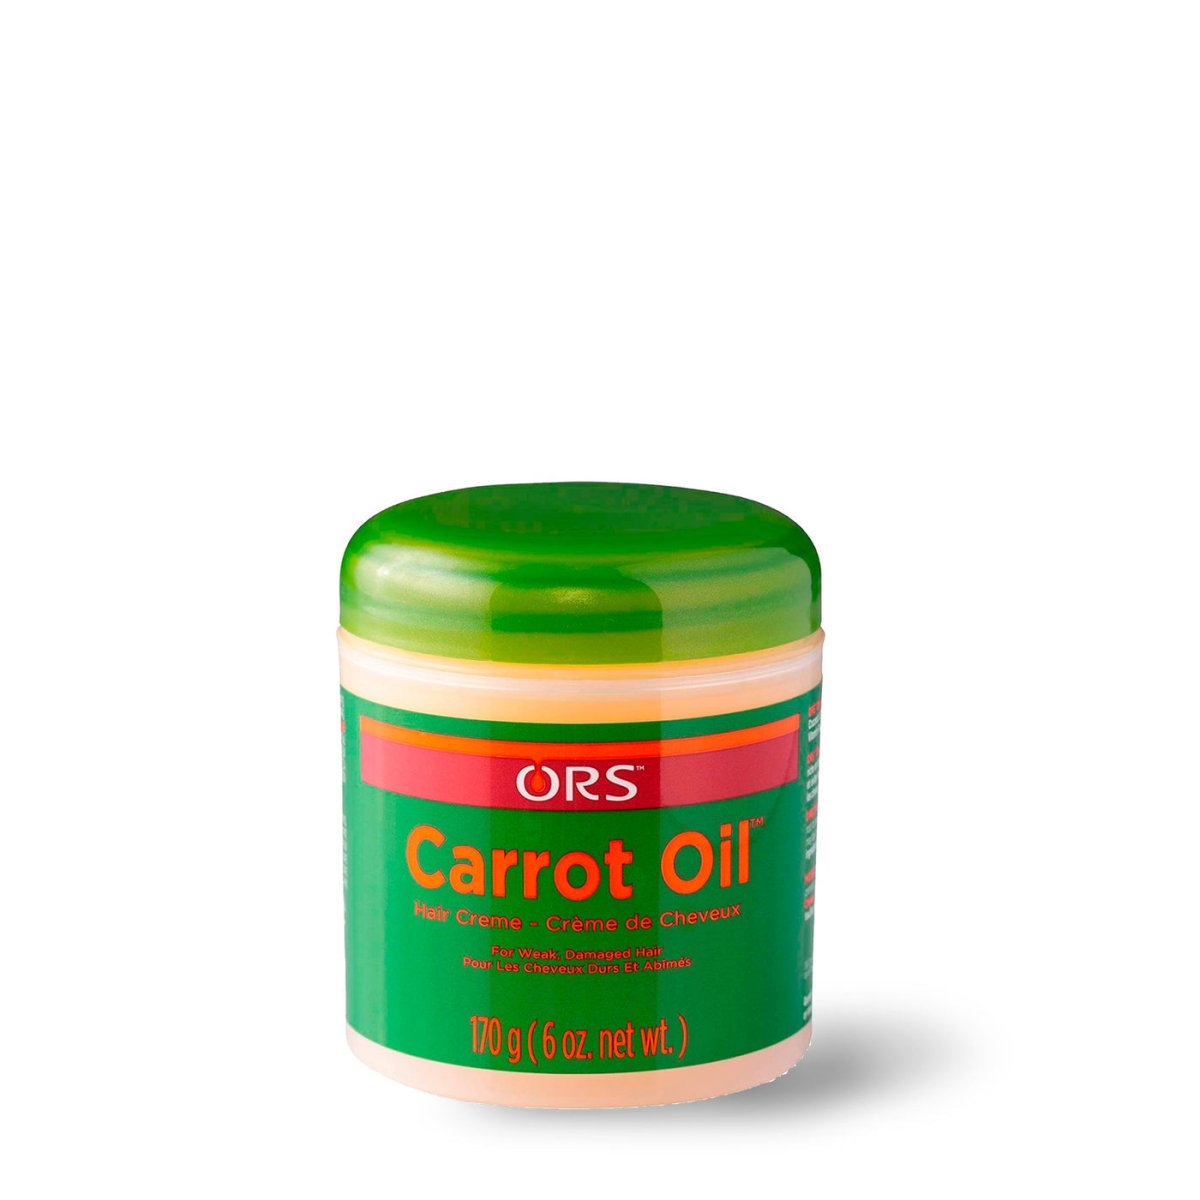 ORS Carrot Oil Hair Crème 6oz - Southwestsix Cosmetics ORS Carrot Oil Hair Crème 6oz Hairdresser ORS Southwestsix Cosmetics 82-PZ3M-UHIW ORS Carrot Oil Hair Crème 6oz